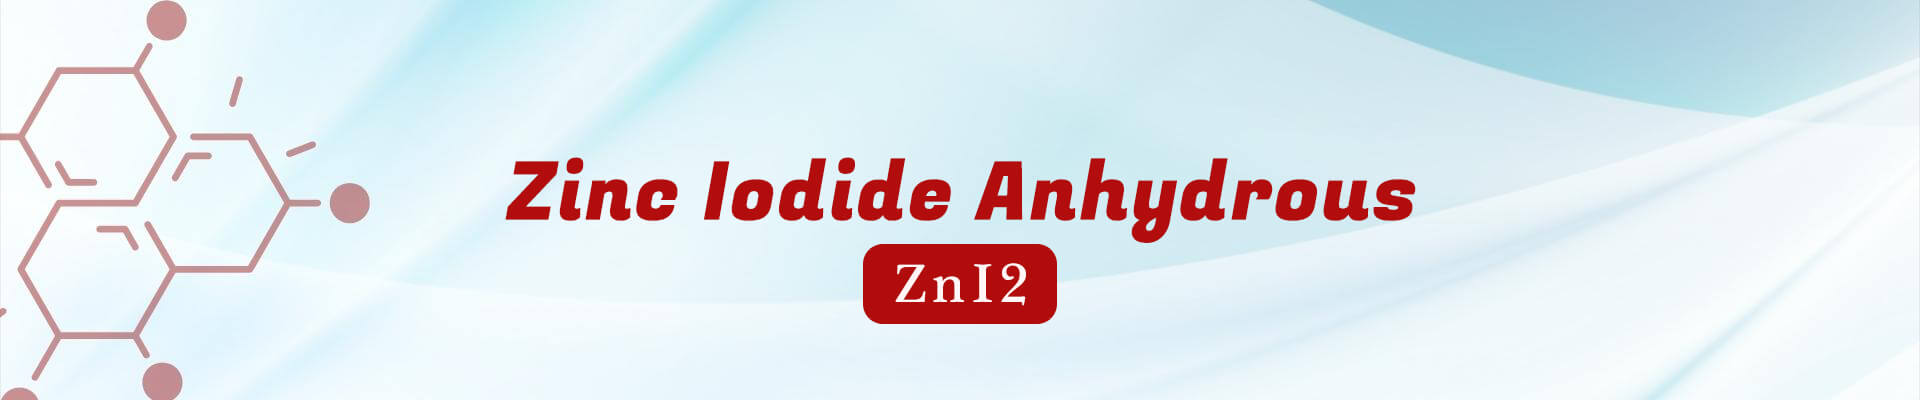 Zinc Iodide Anhydrous